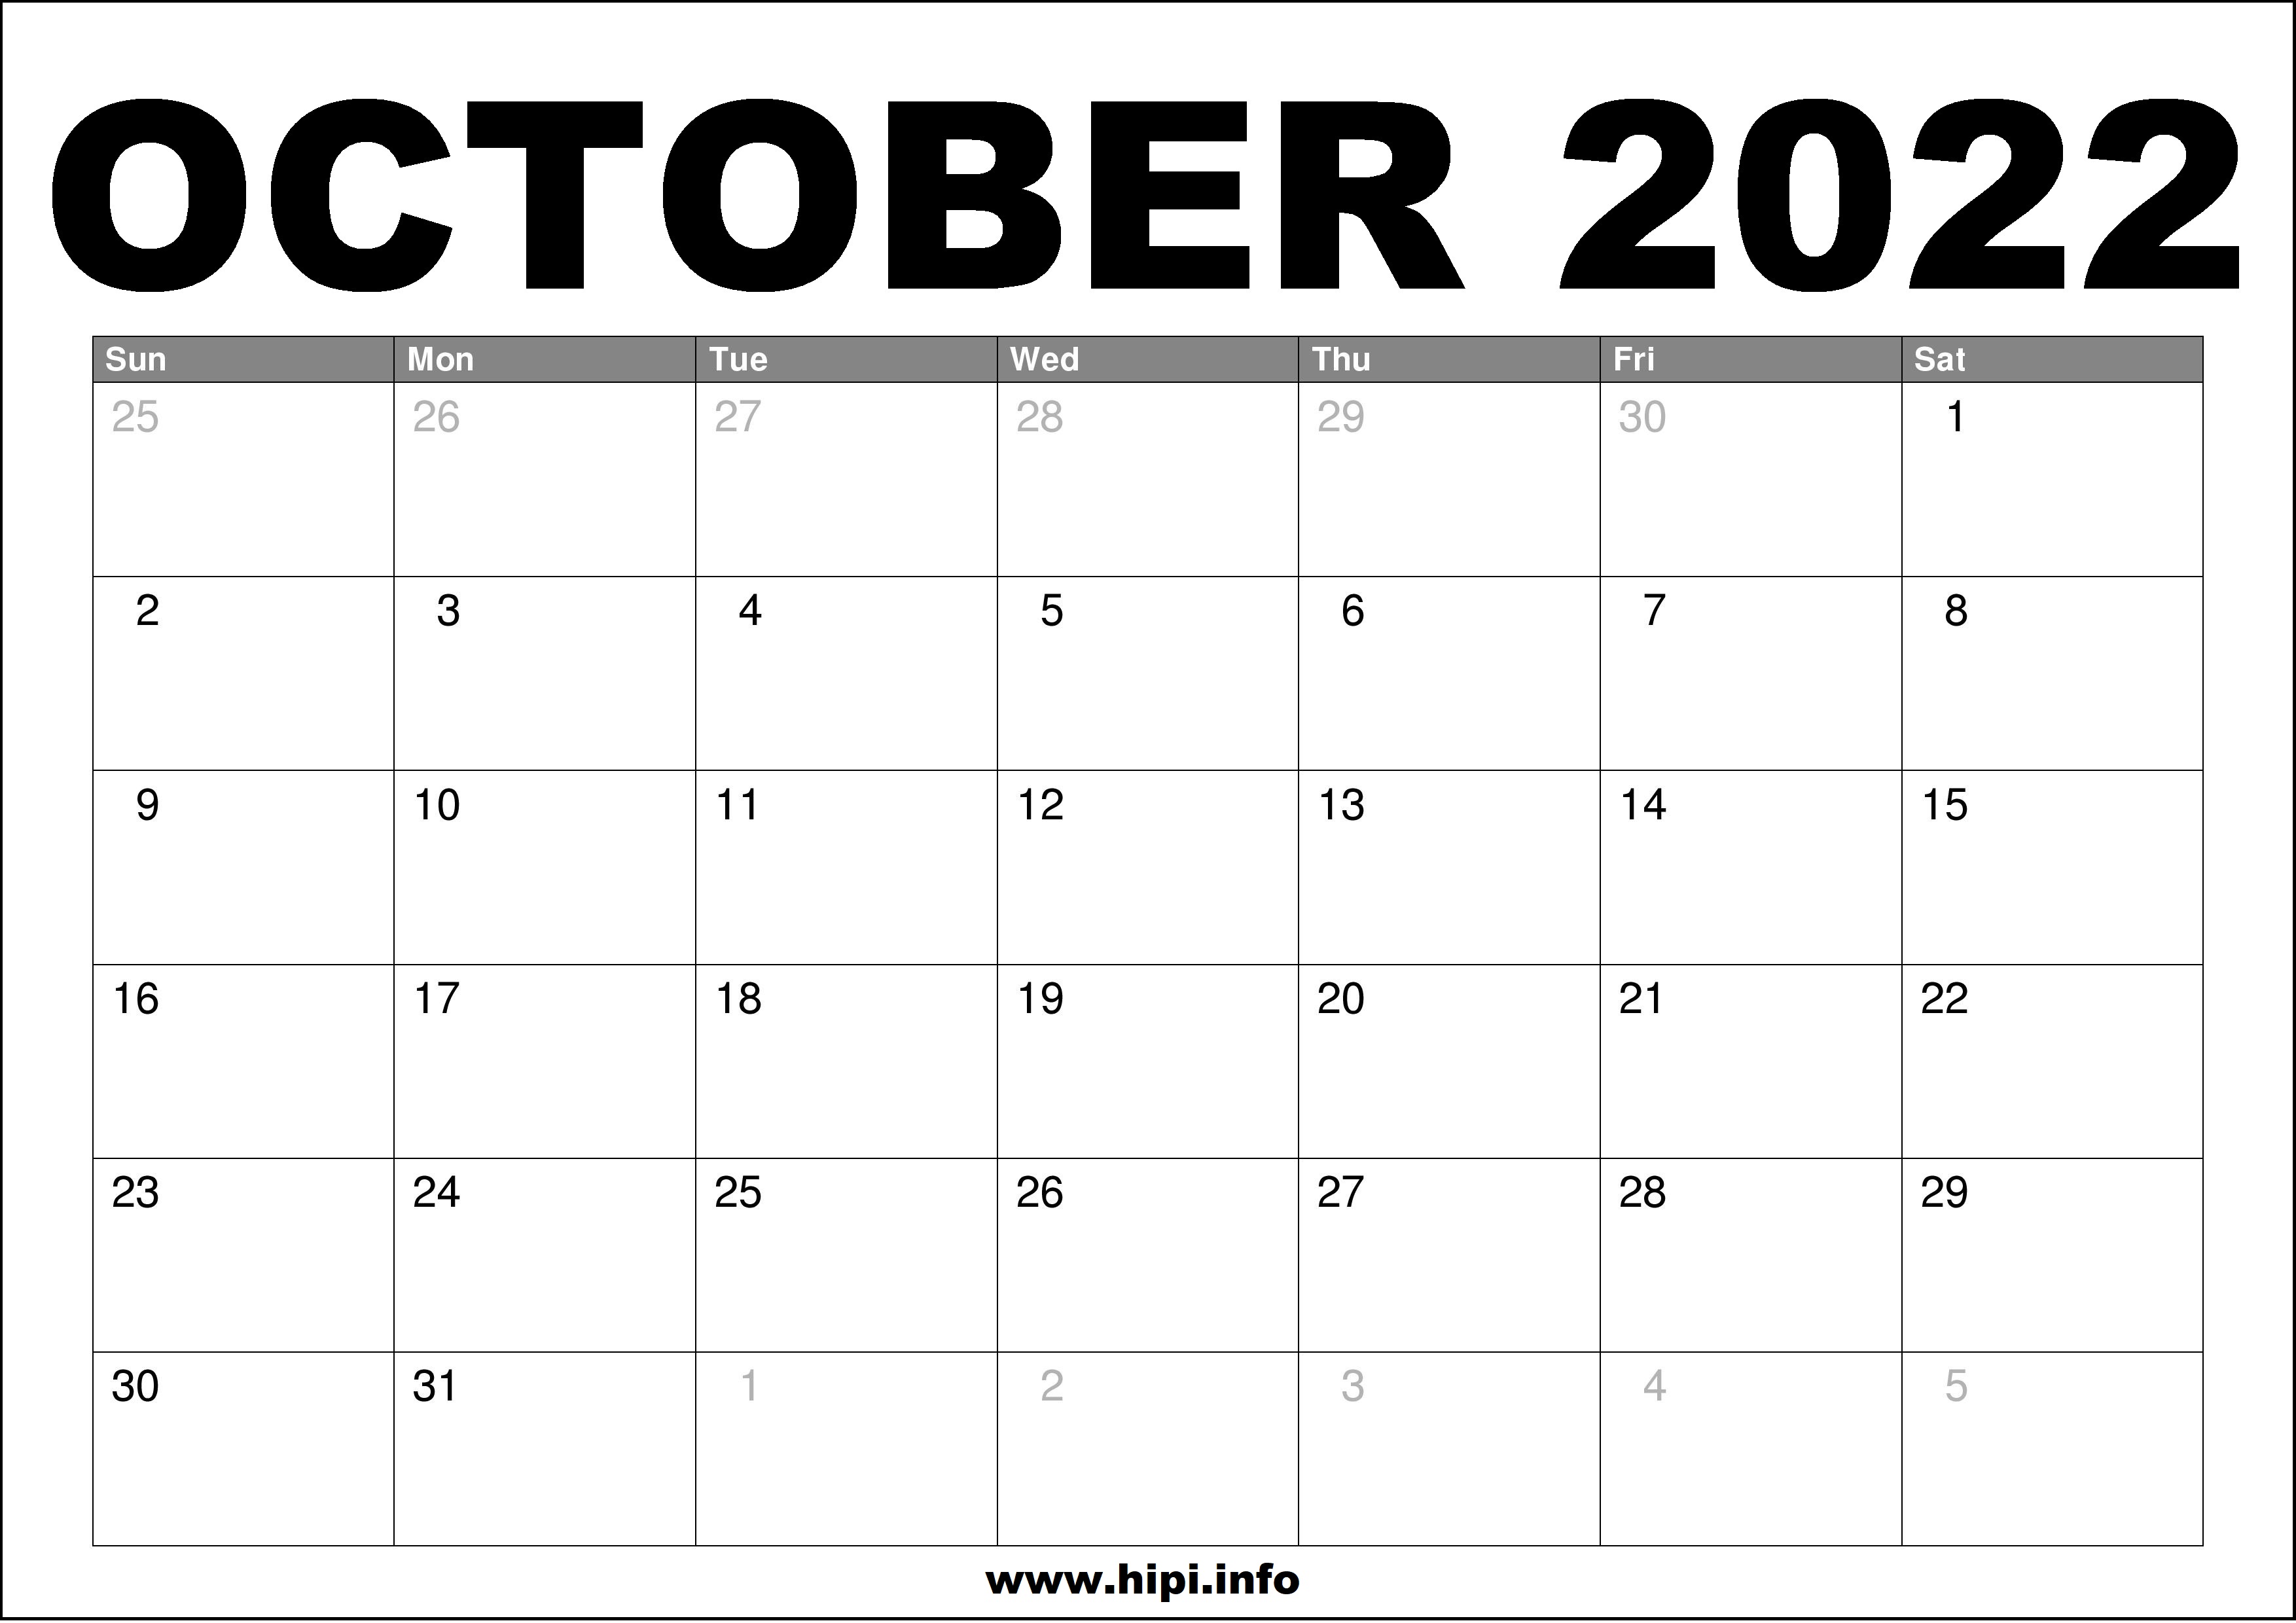 October 2022 Calendar Pdf October 2022 Calendar Printable Free - Hipi.info | Calendars Printable Free